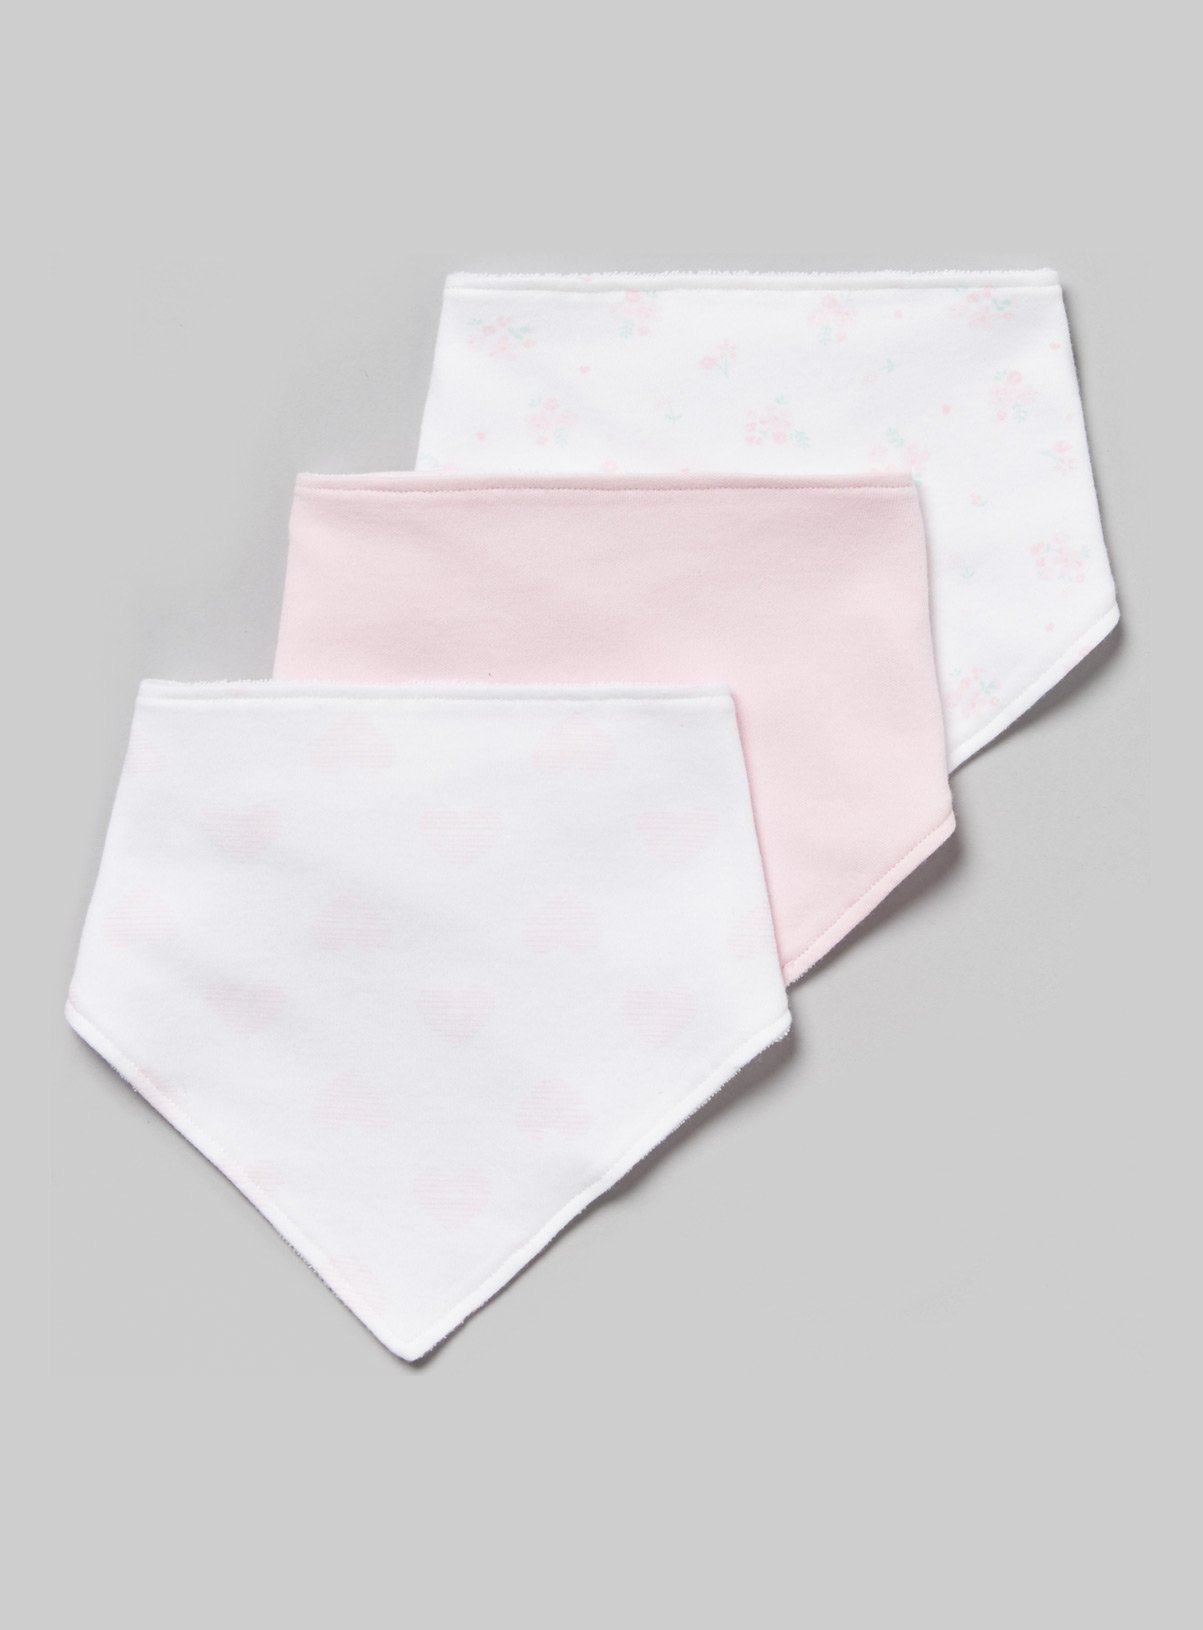 Pink & White Print Hanky Bibs 3 Pack Review